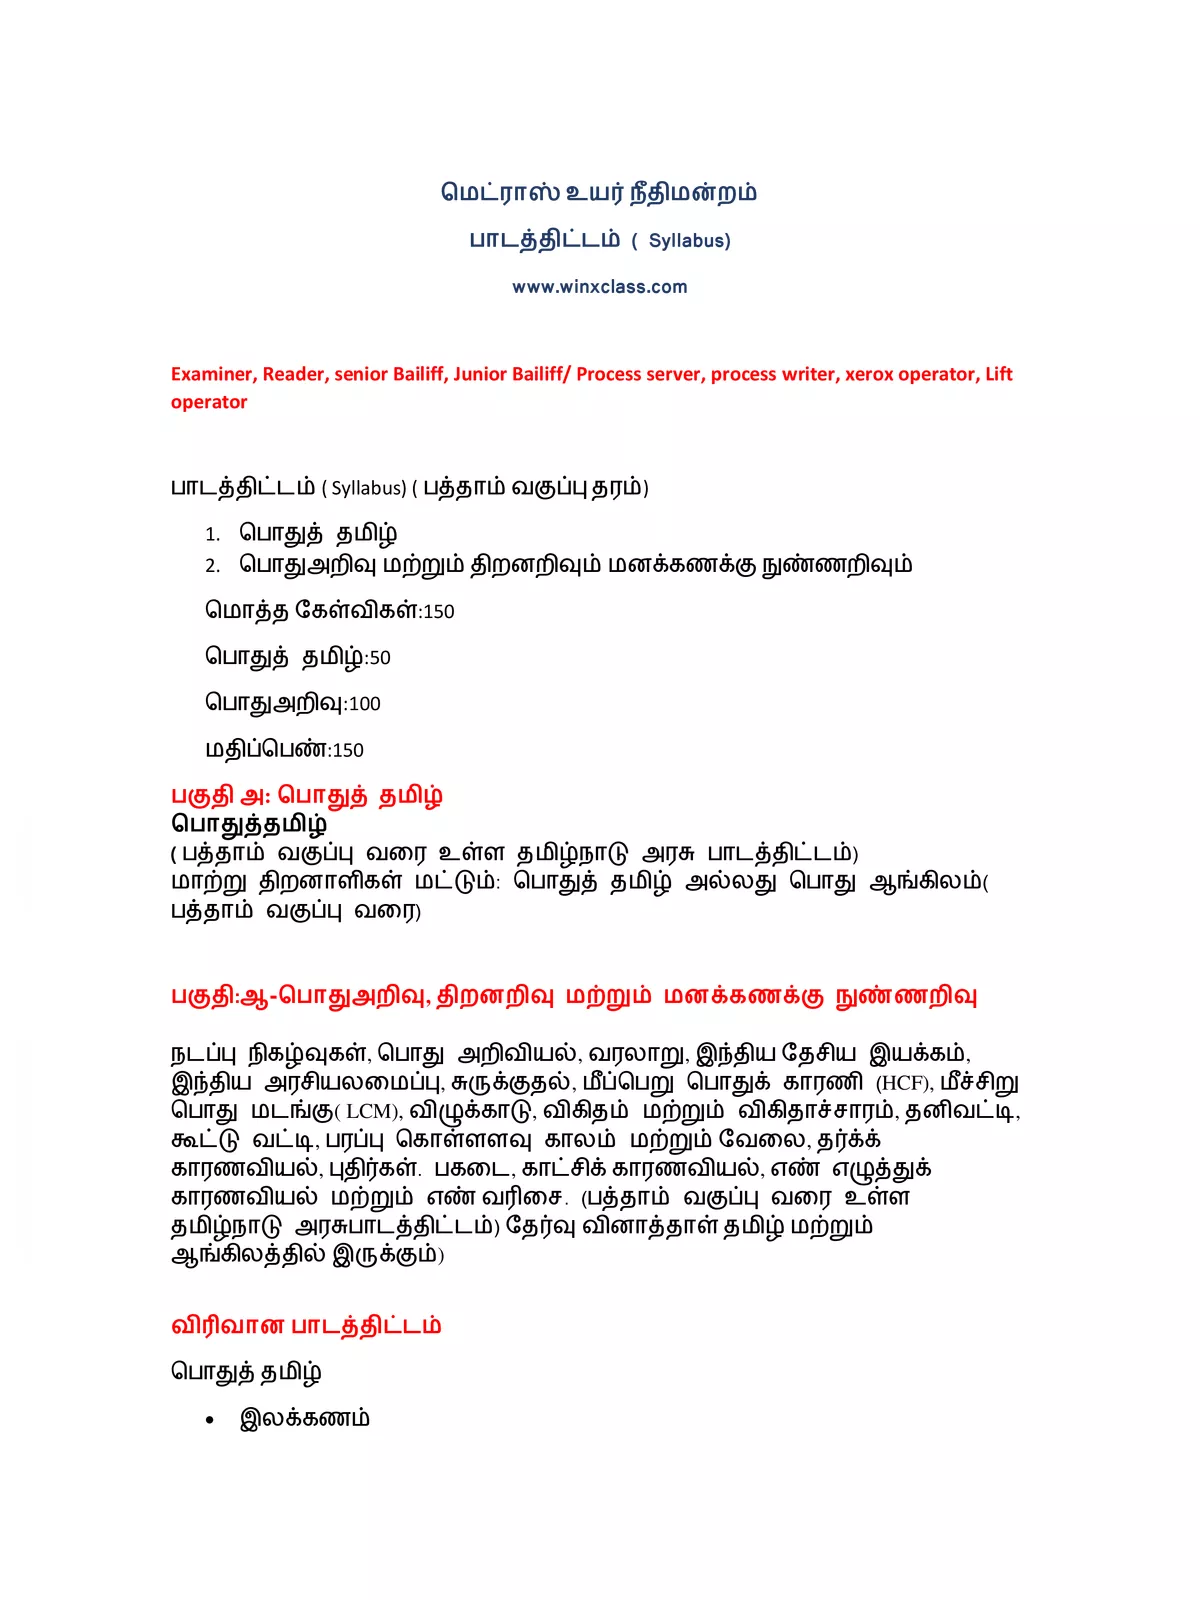 Madras High Court Exam Syllabus 2022